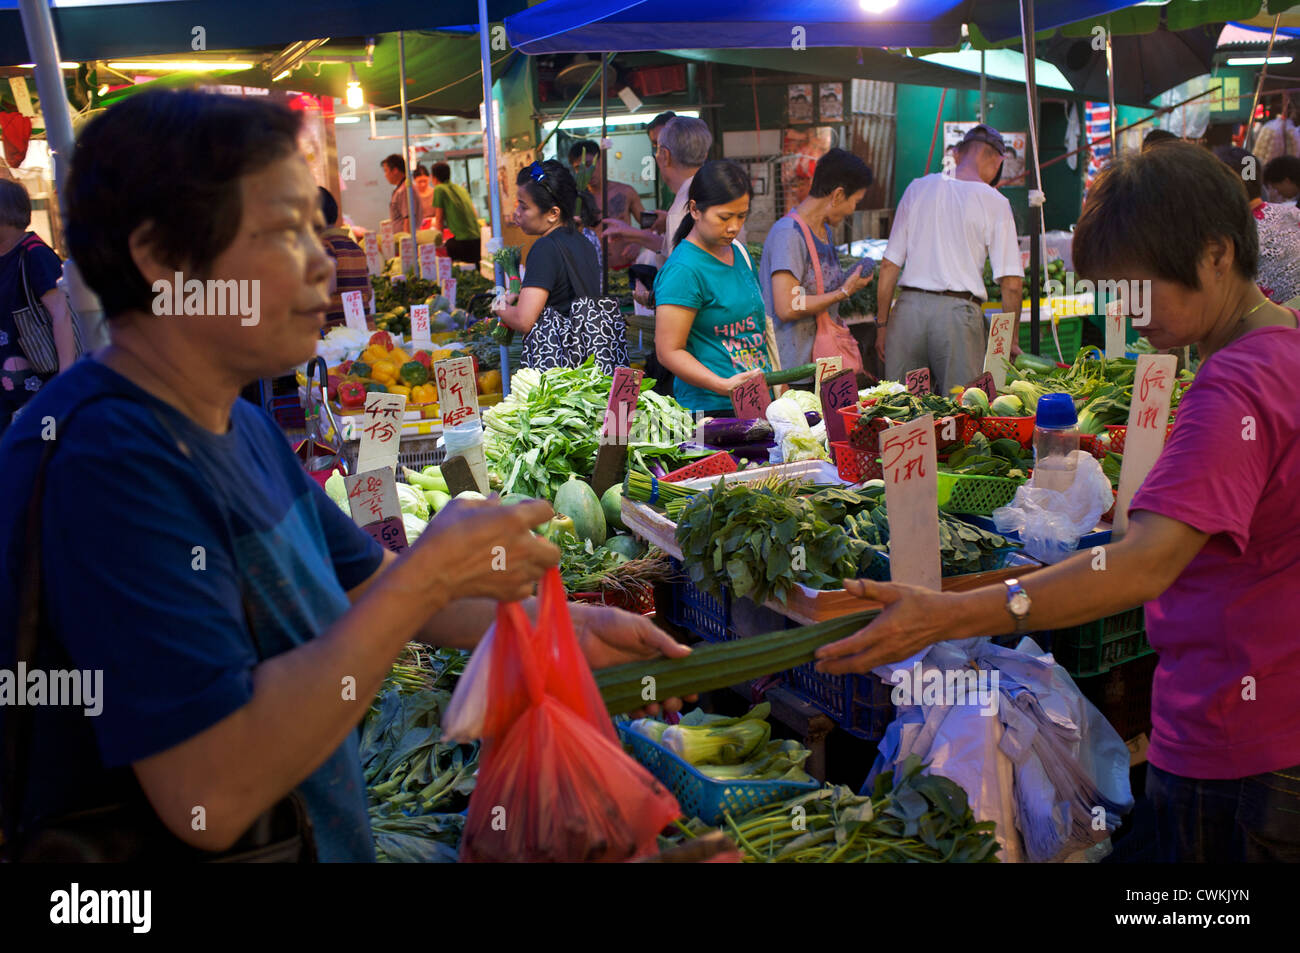 El mercado de alimentos de Hong Kong. 27-Aug-2012 Foto de stock